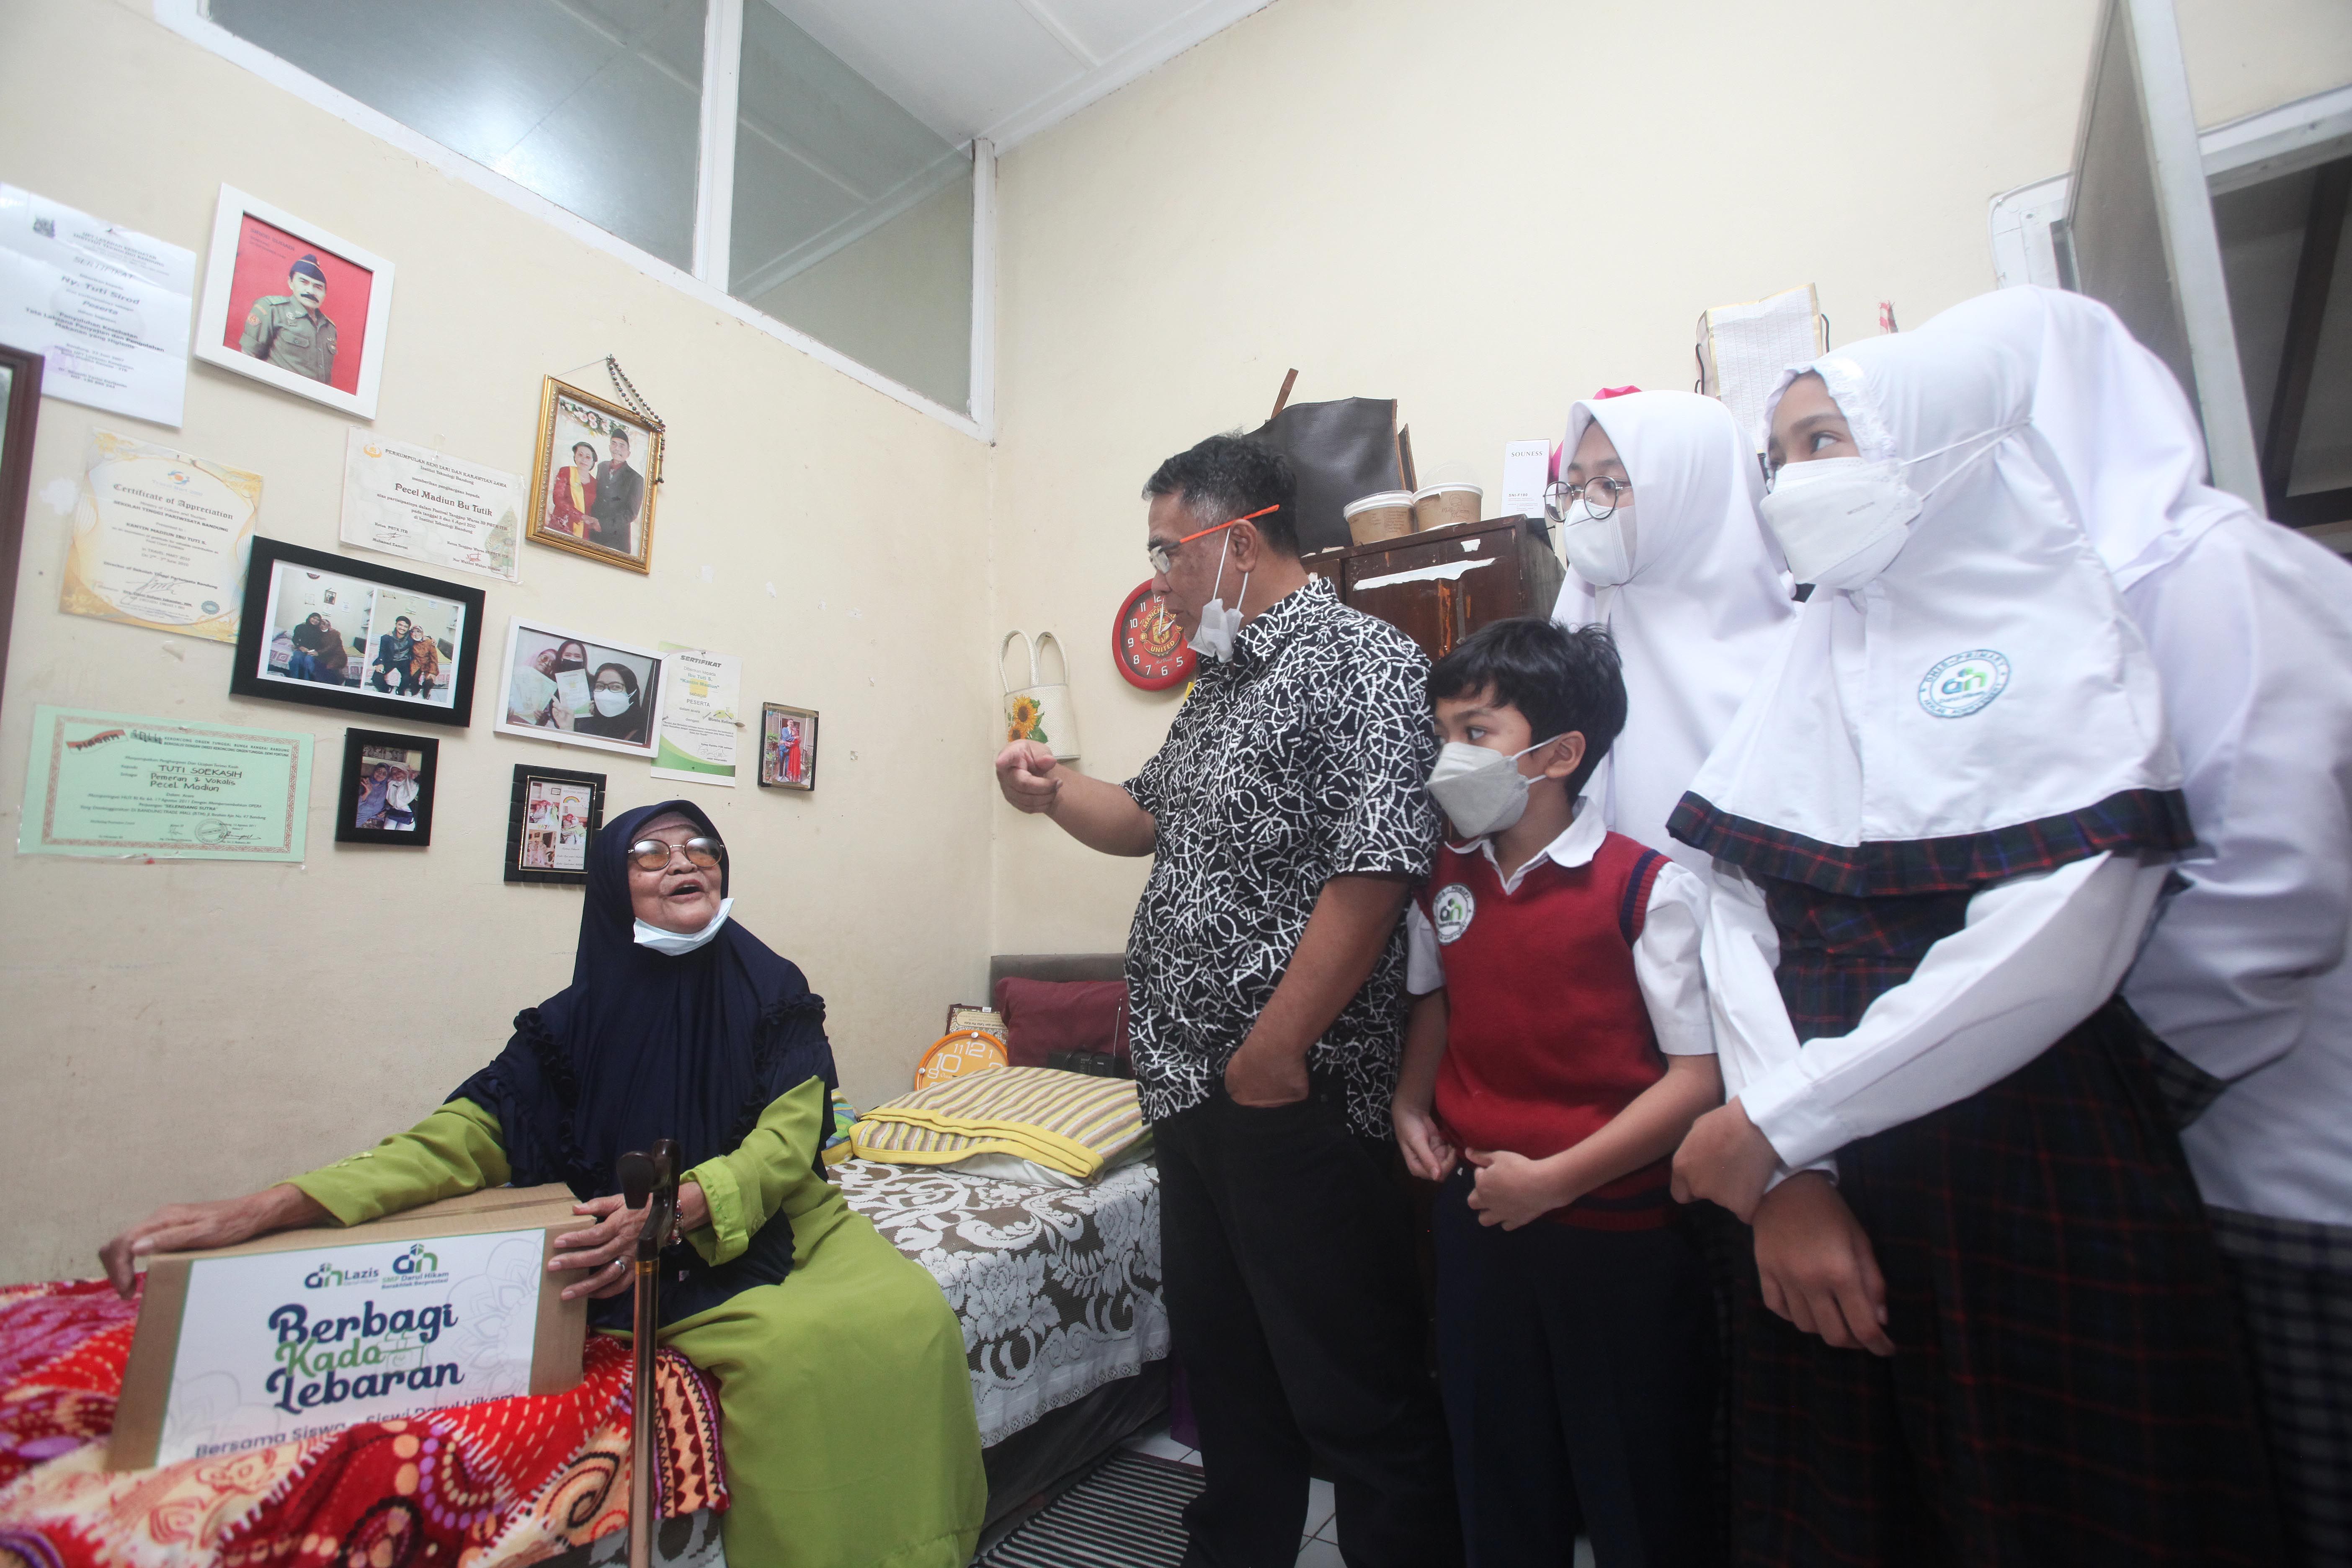 Ketua Yayasan Darul Hikam, Sodik Mudjahid menyerahkan paket kepada lansia pada acara penyerahan Berbagi Kado Lebaran di Panti Sosial Tresna Werdha Budi Pertiwi, Jalan Sancang, Kota Bandung, Jawa Barat, Kamis (21/4/2022). 